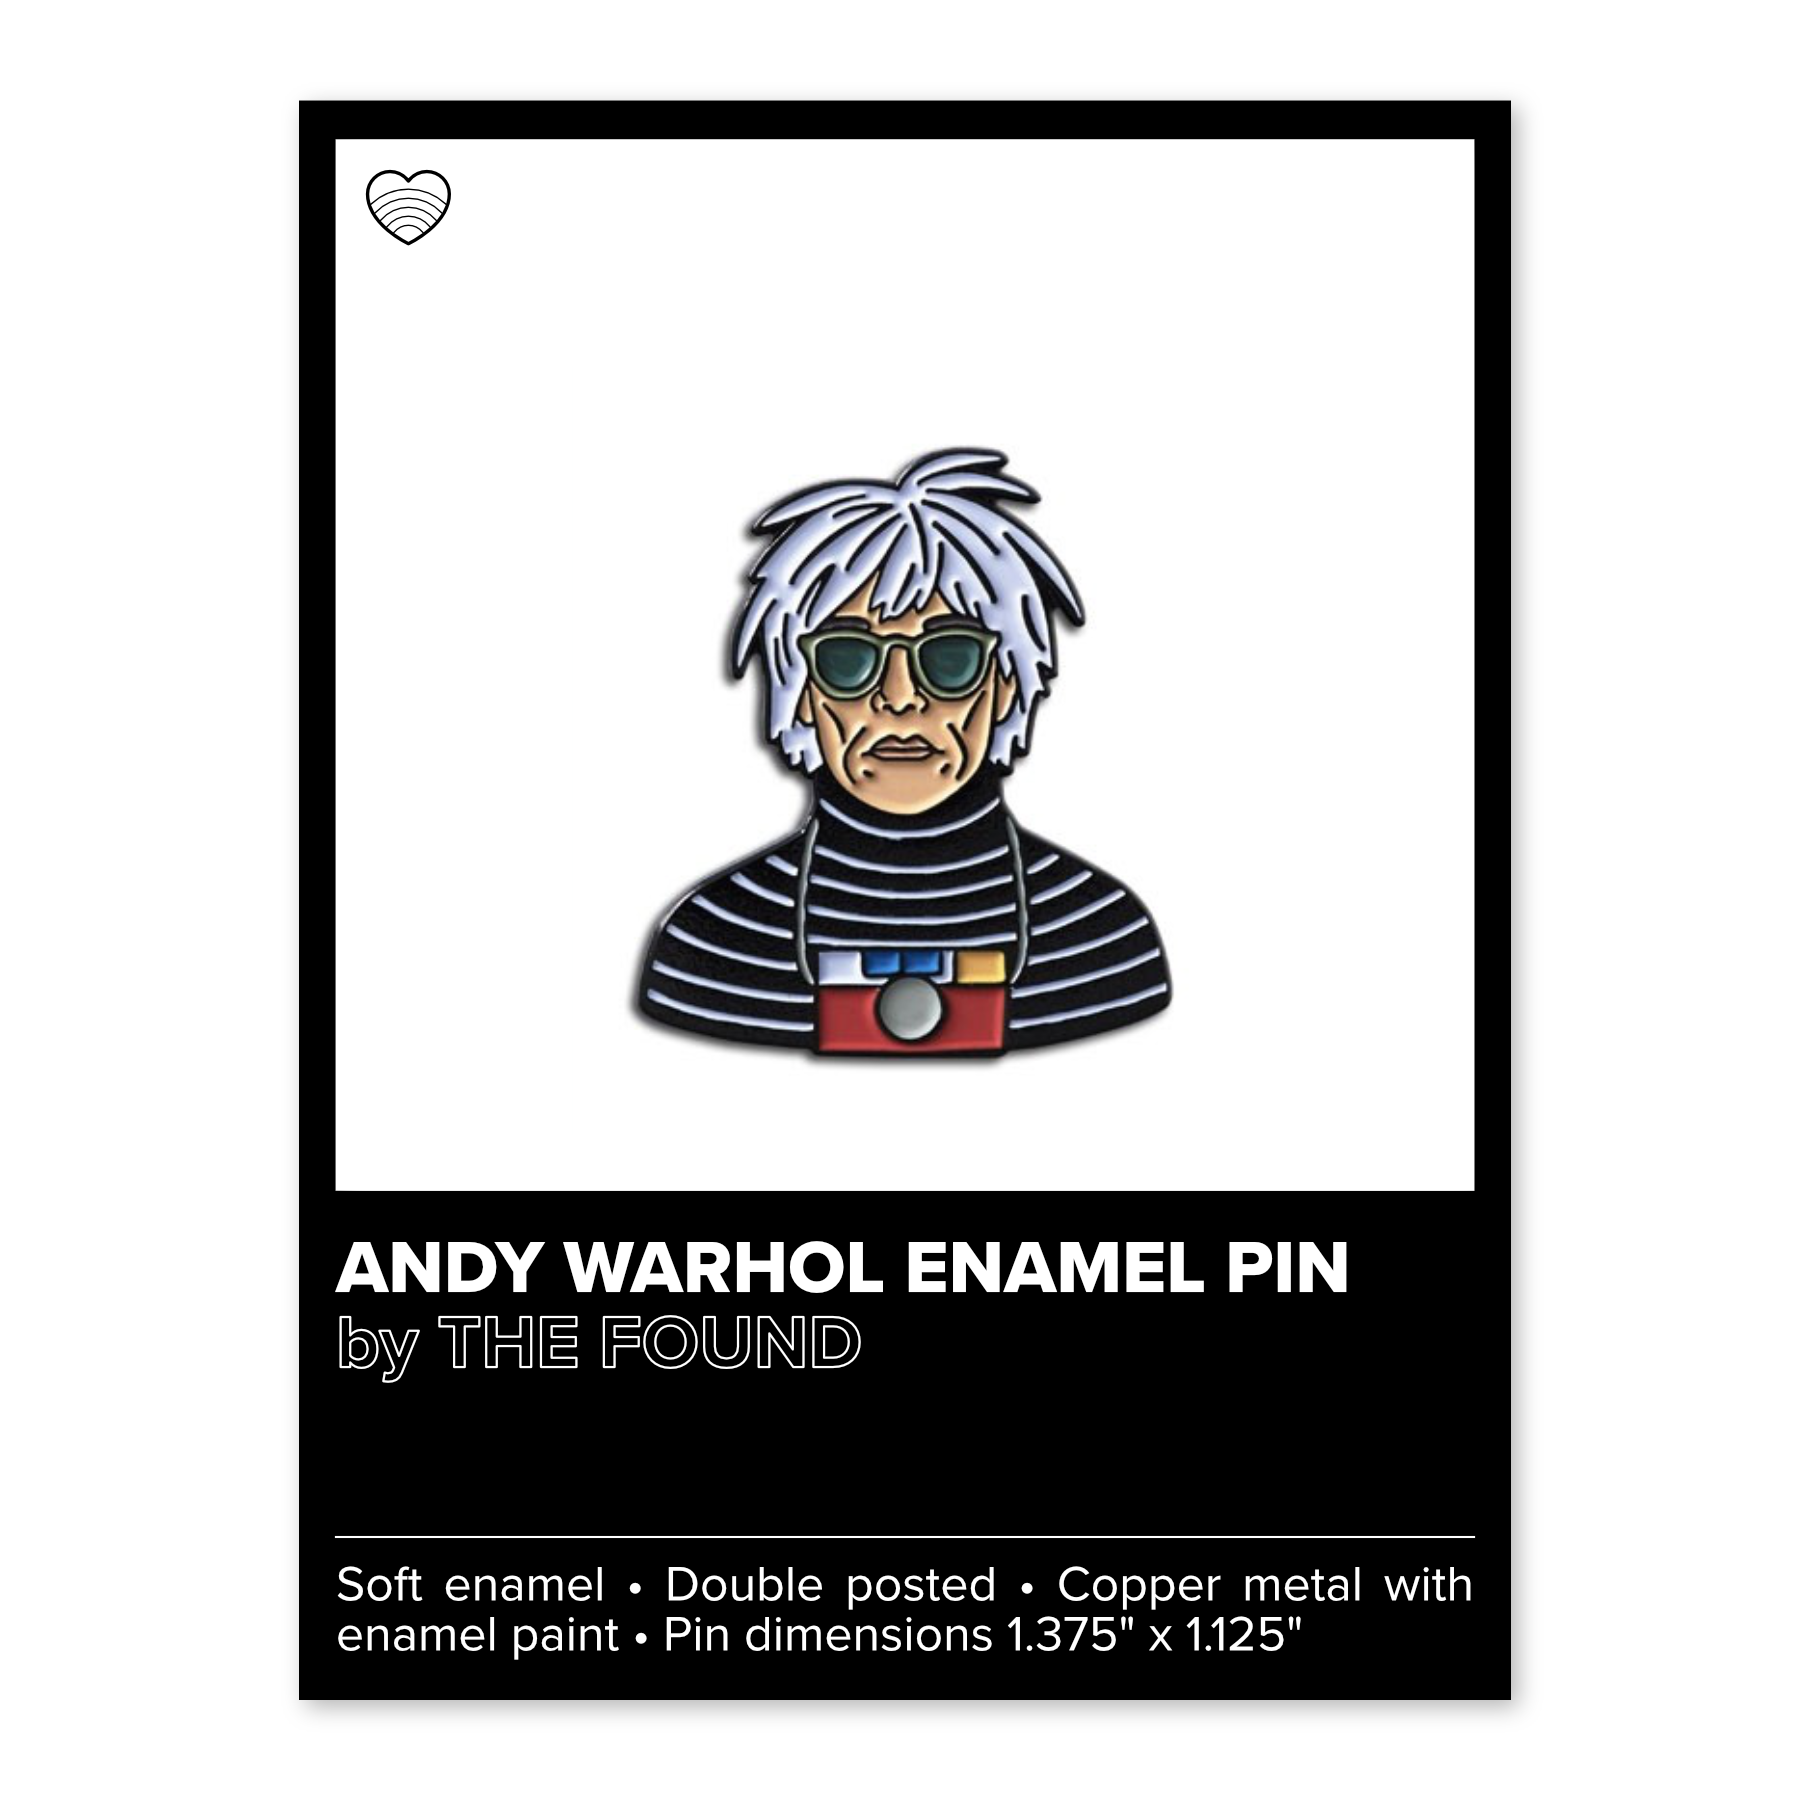 ANDY WARHOL ENAMEL PIN